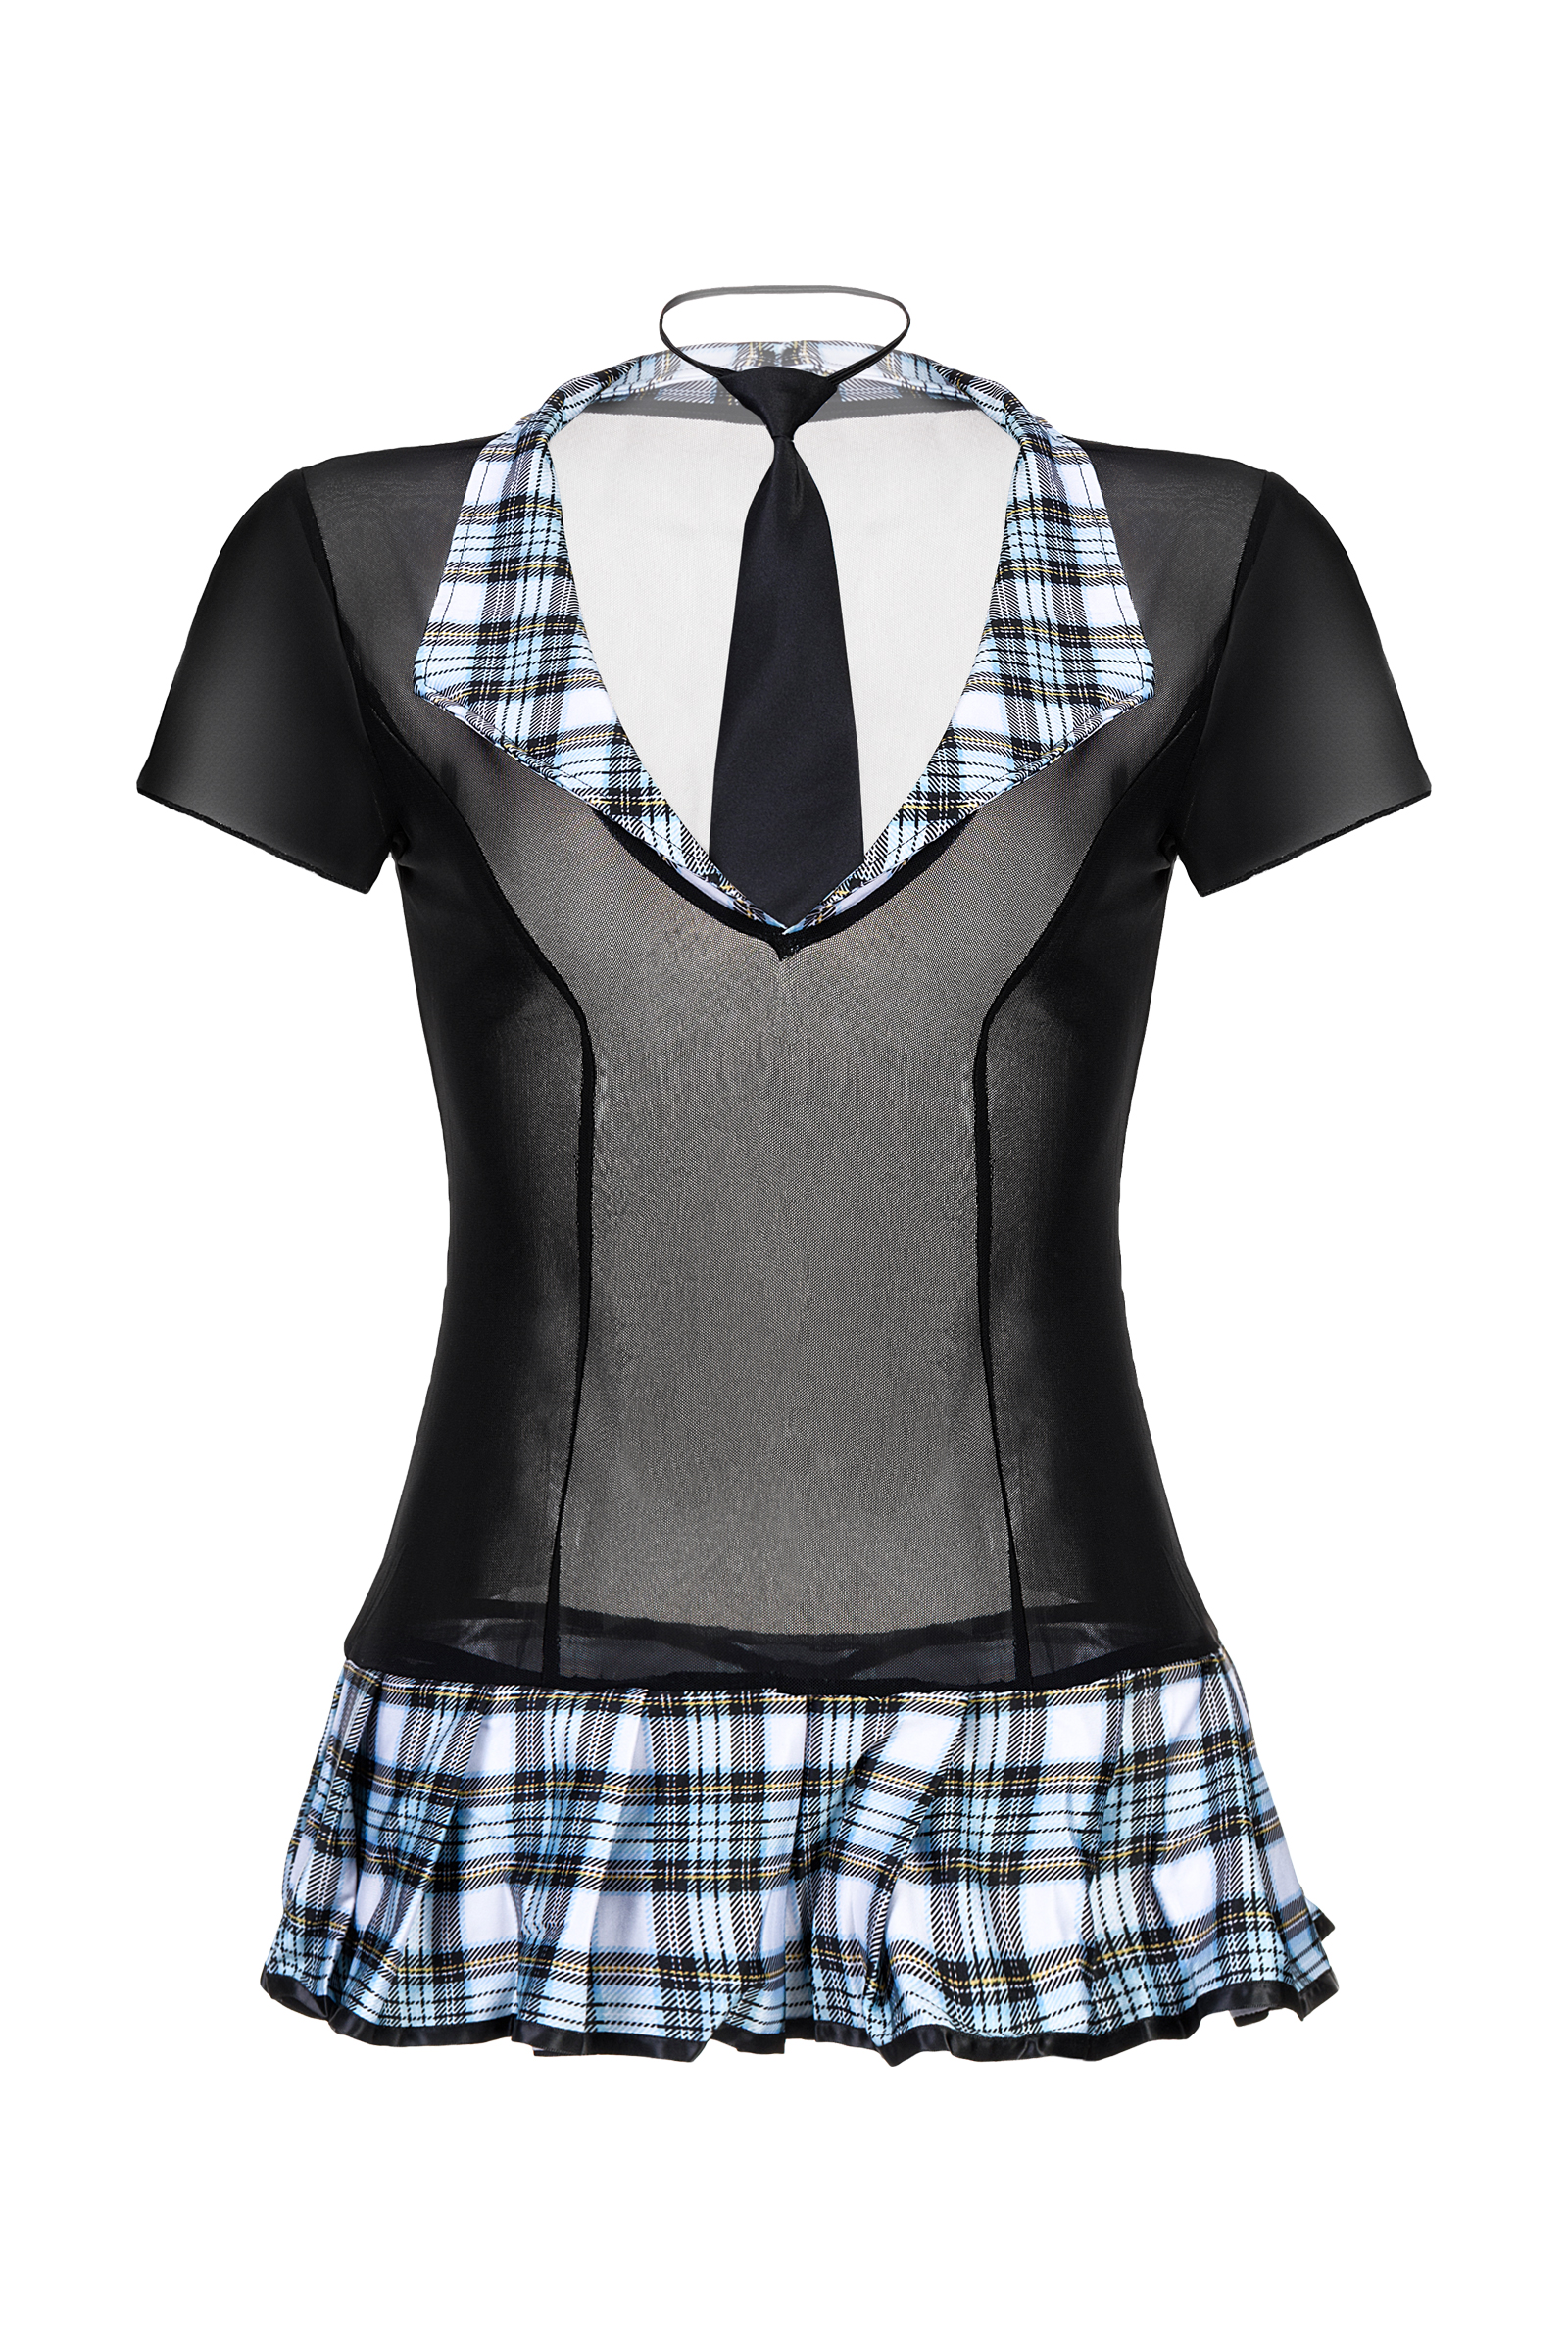 Костюм школьницы Candy Girl Micki (топ, галстук, стринги), черно-синий, OS. Фото N8